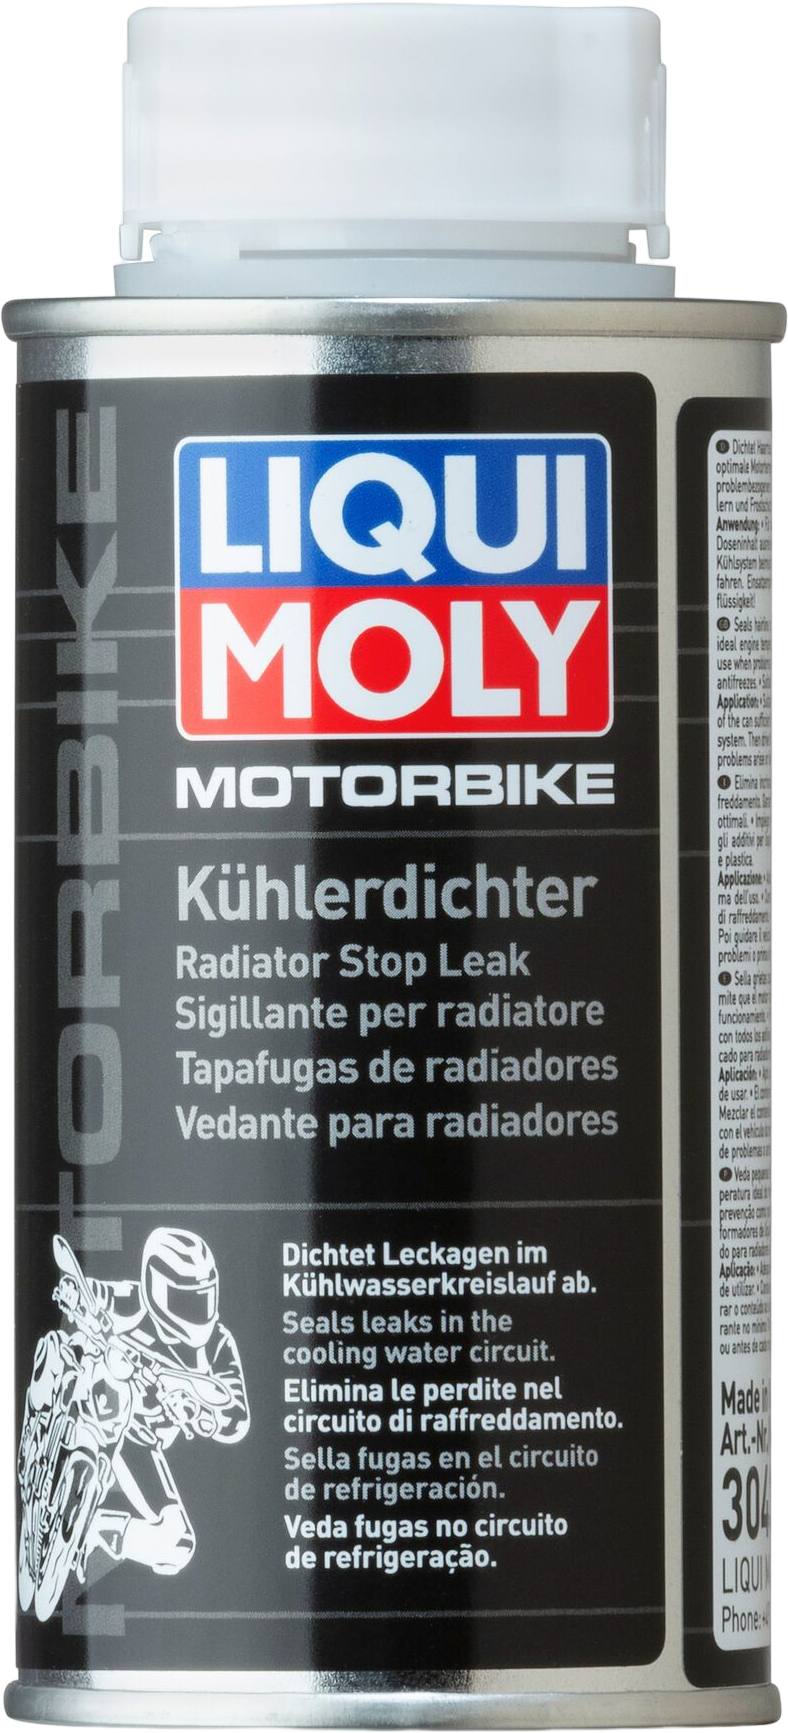 Liqui Moly Motorbike Radiatordichter, 125 ml